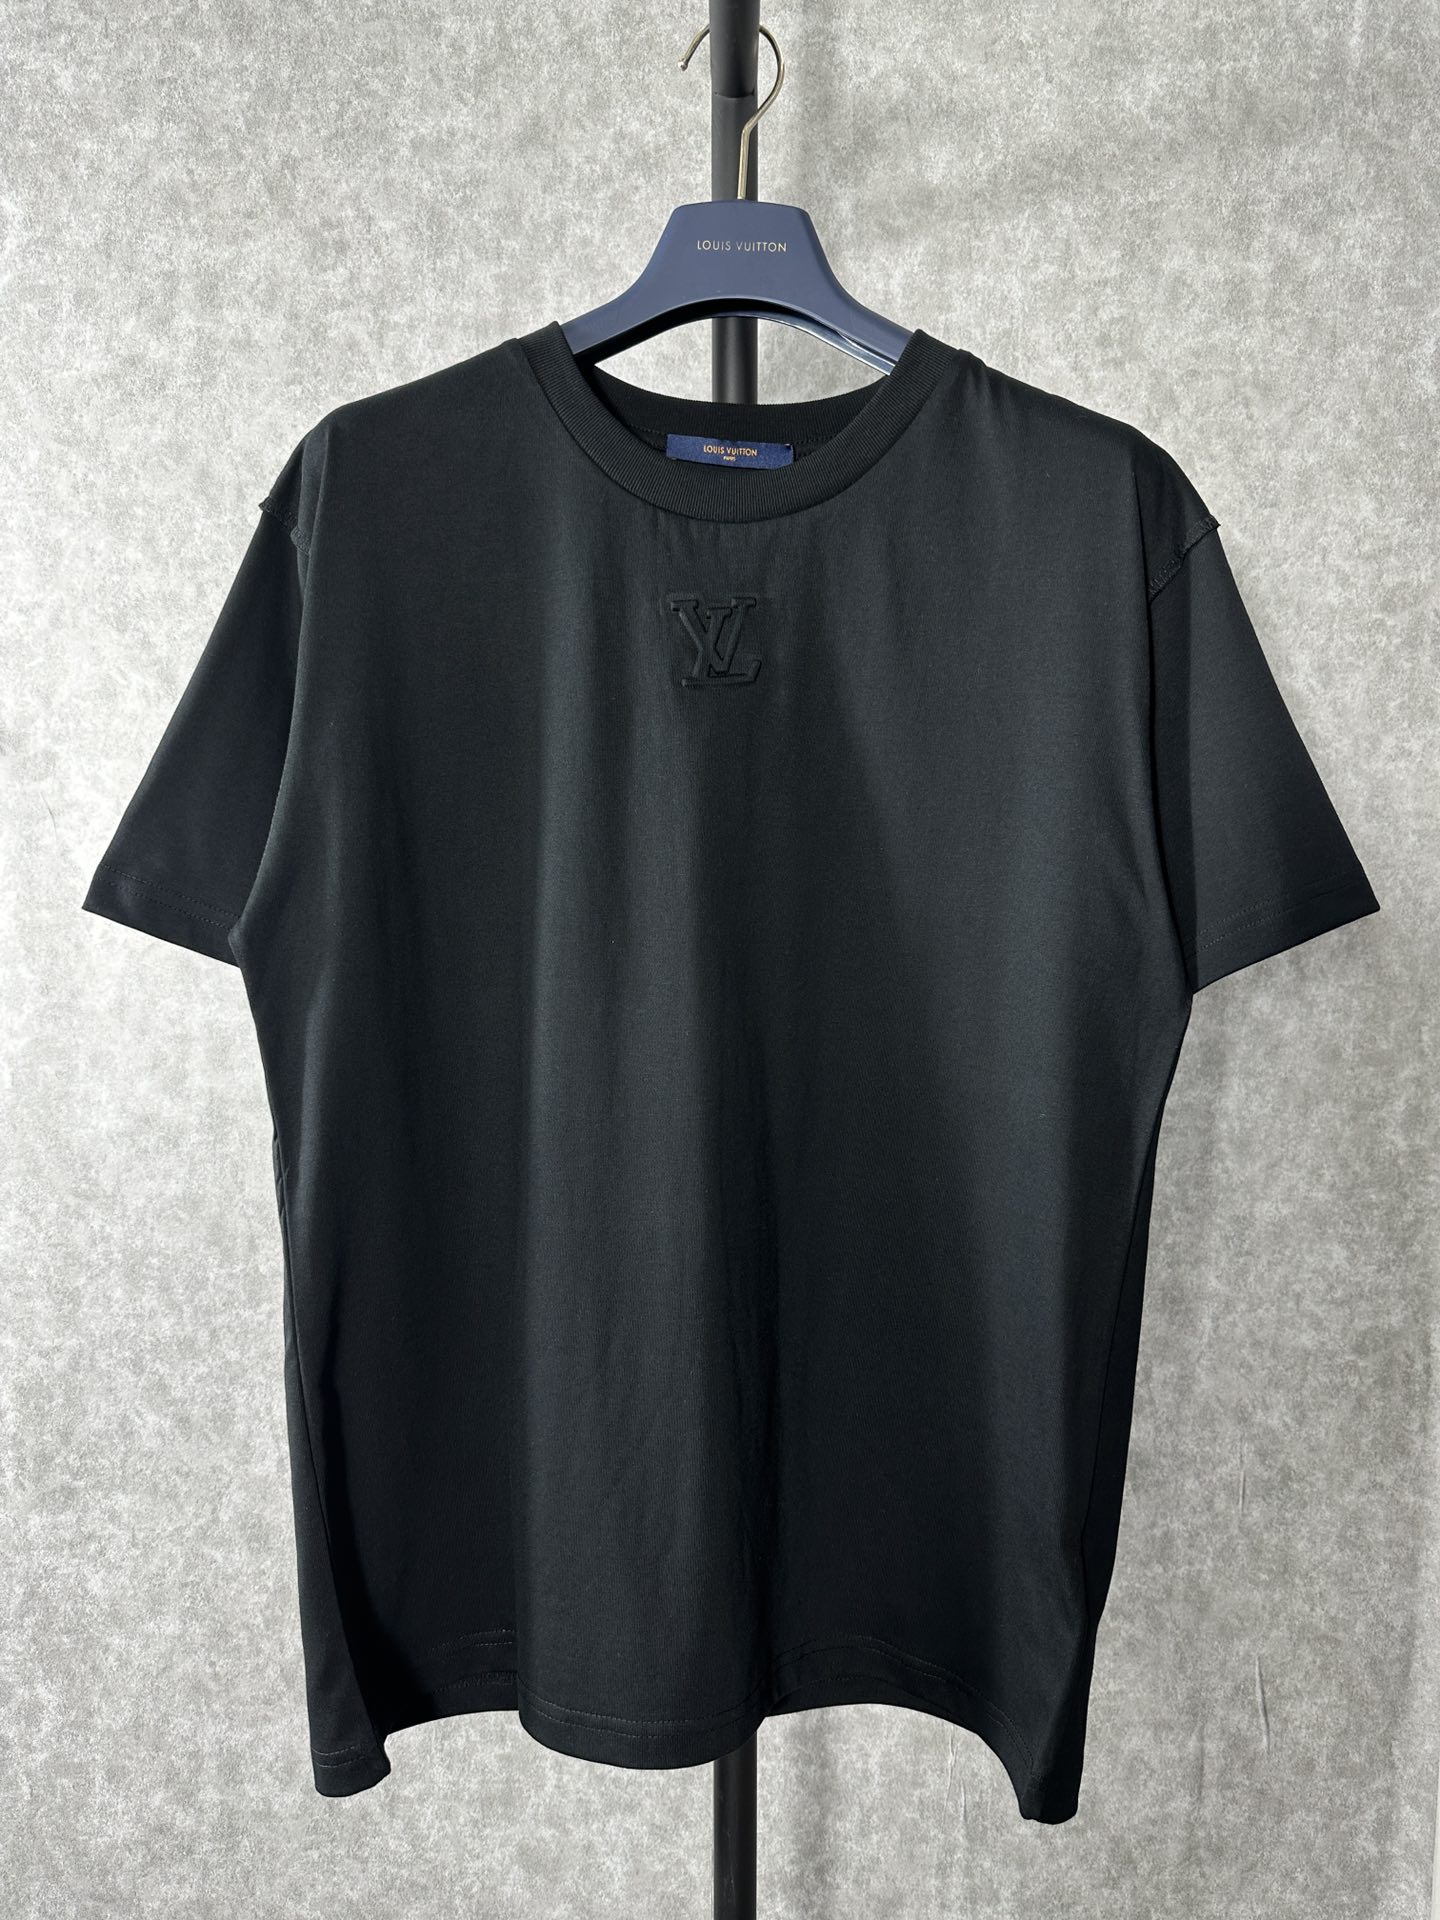 Louis Vuitton Clothing T-Shirt Best Replica
 Black Unisex Cotton Spring/Summer Collection Short Sleeve